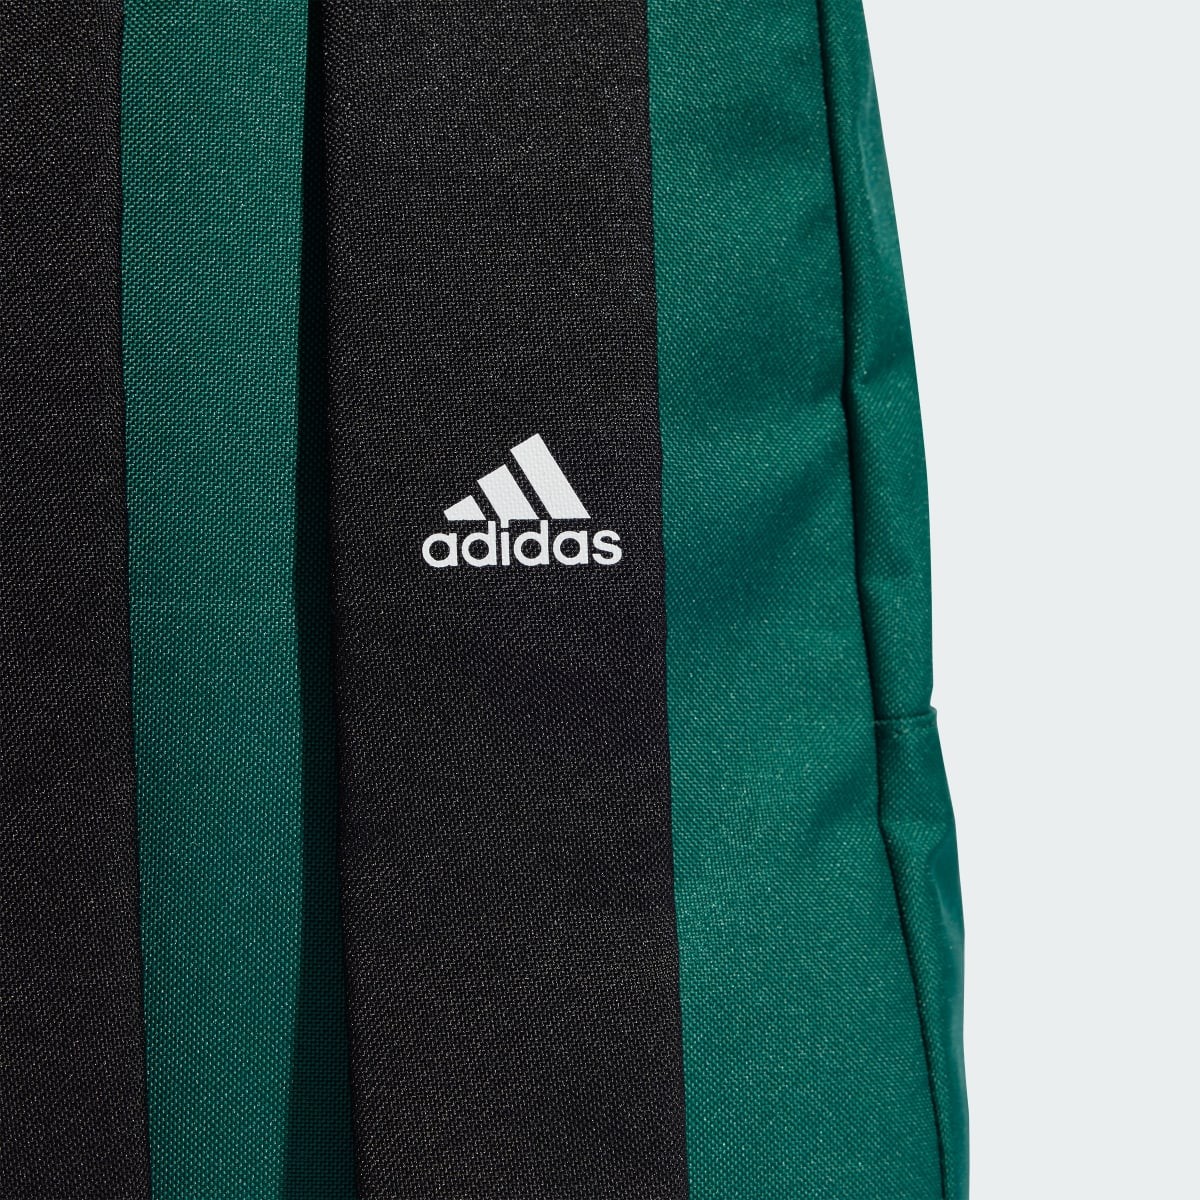 Adidas Brand Love Backpack. 7